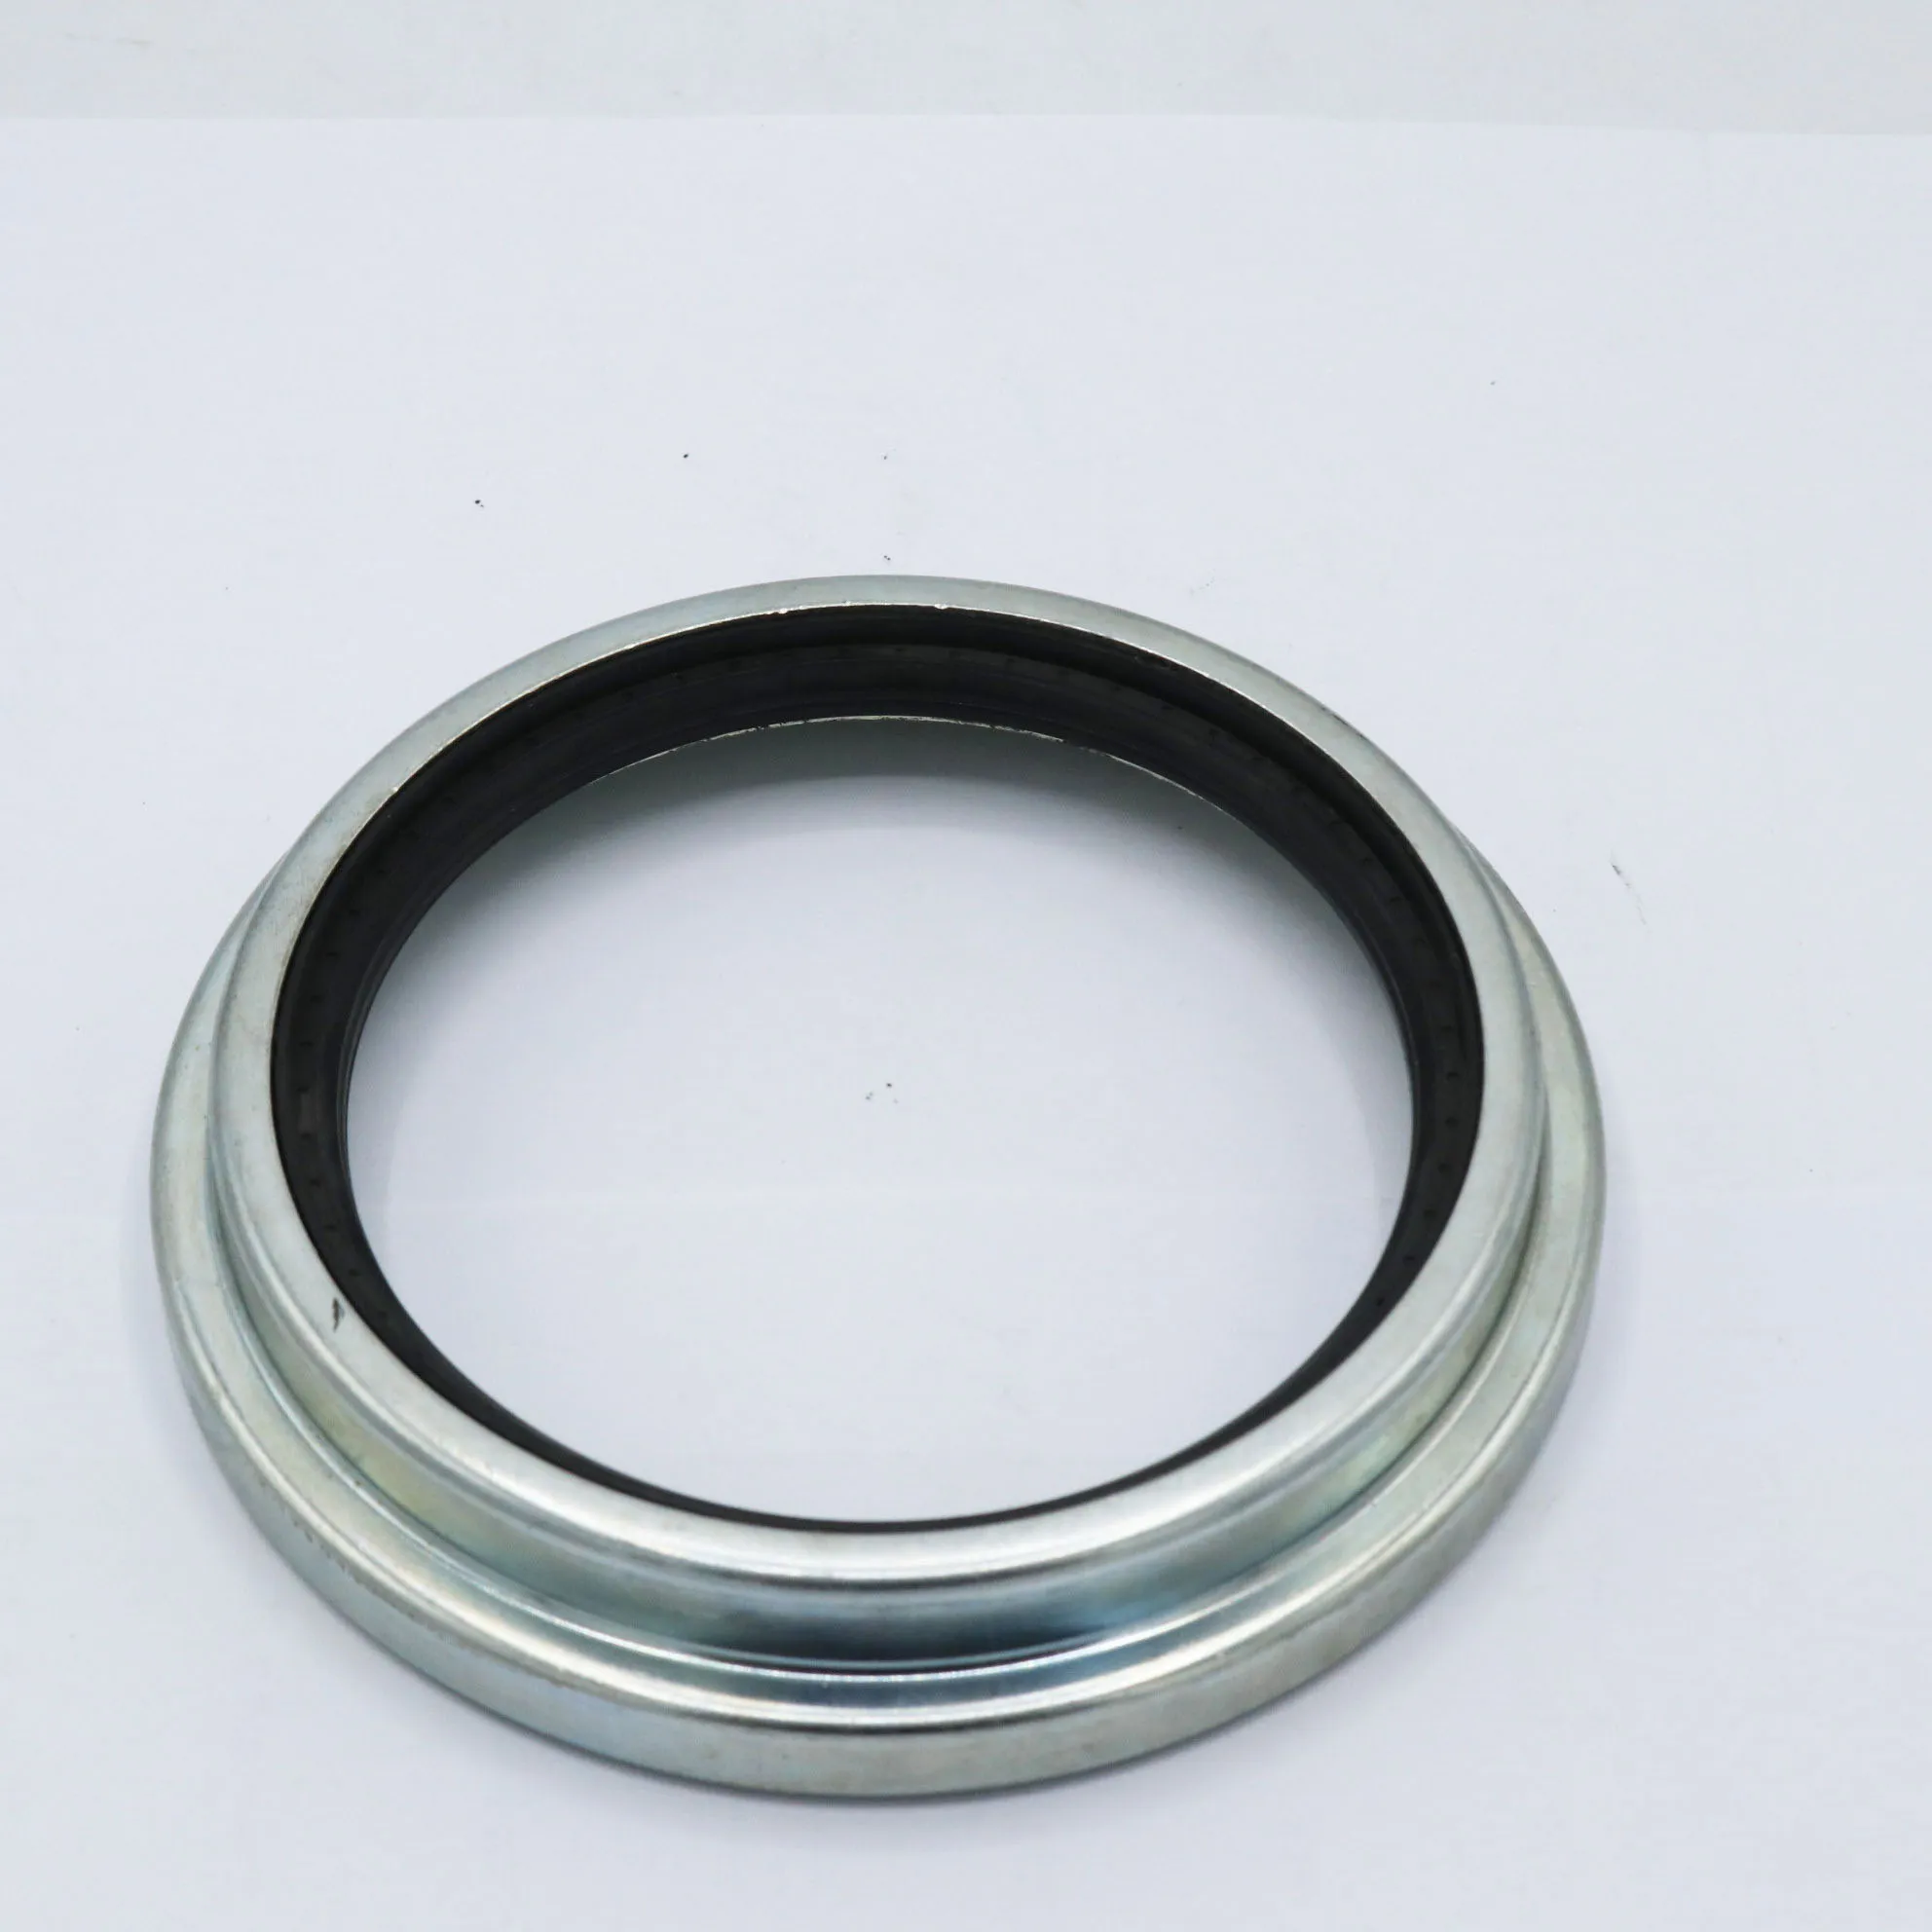 NNK manufactures wheel hub oil seals 117.6*152.4*25